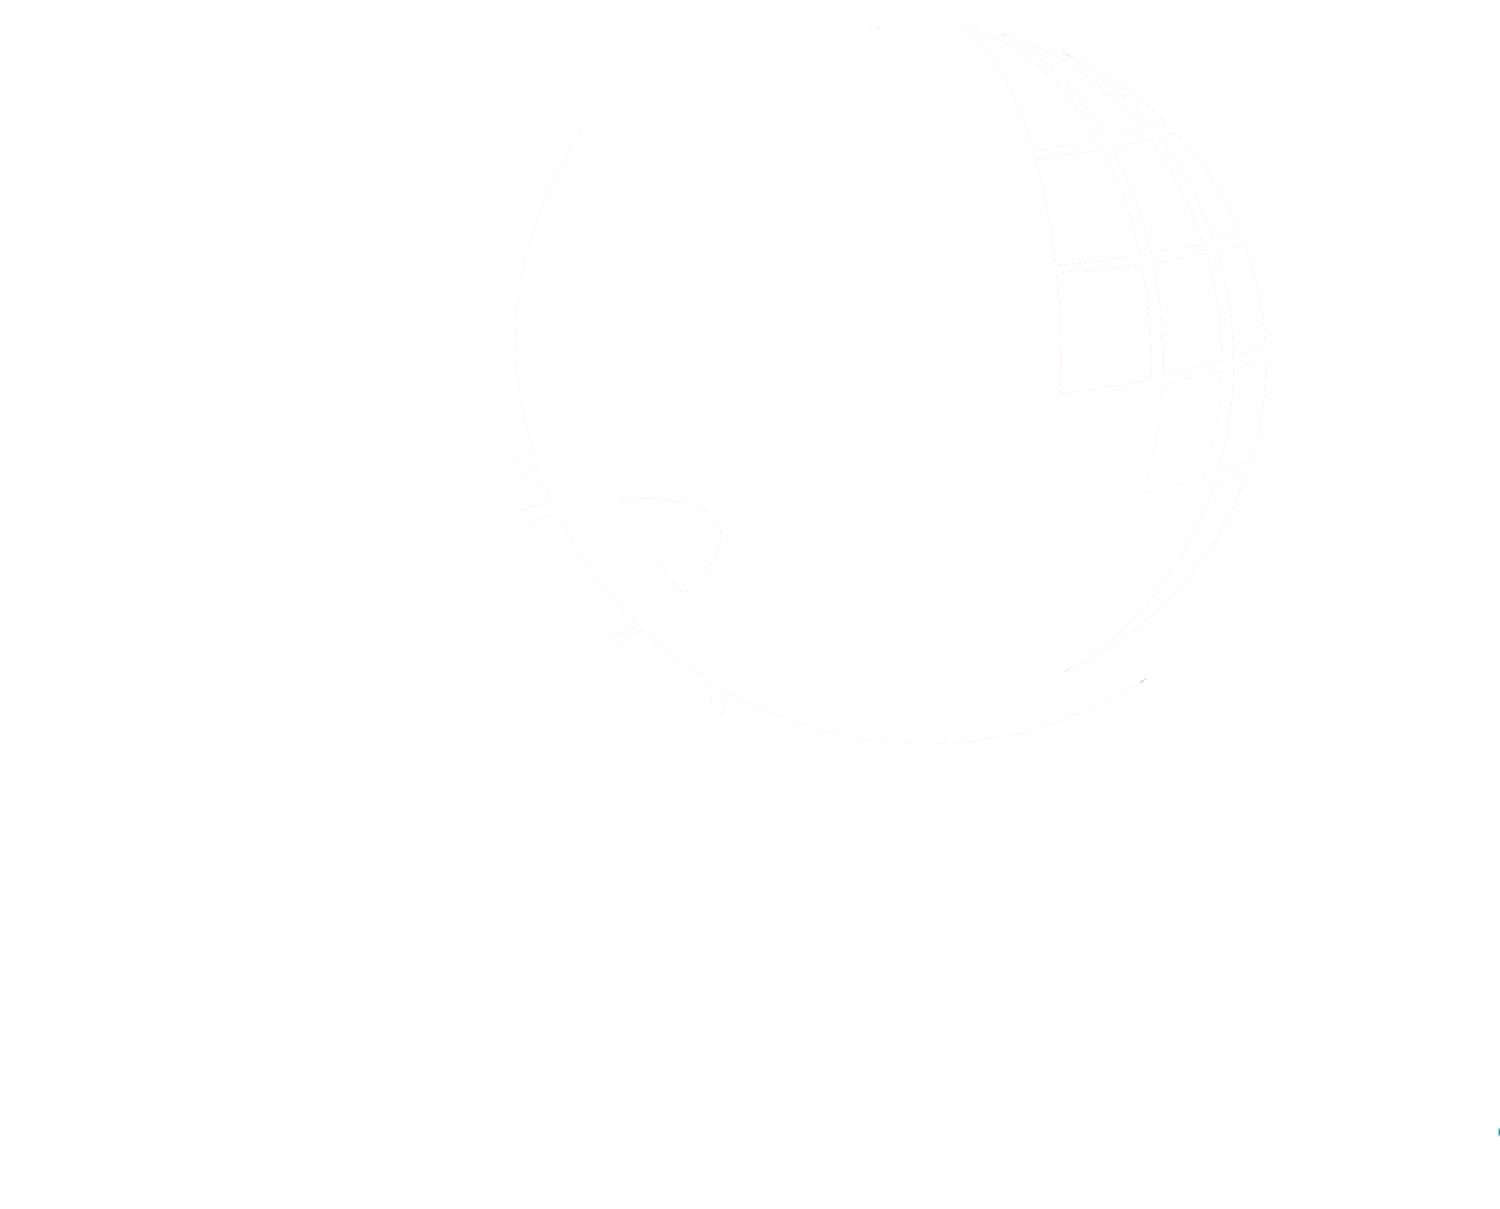 Calvary United Pentecostal Church